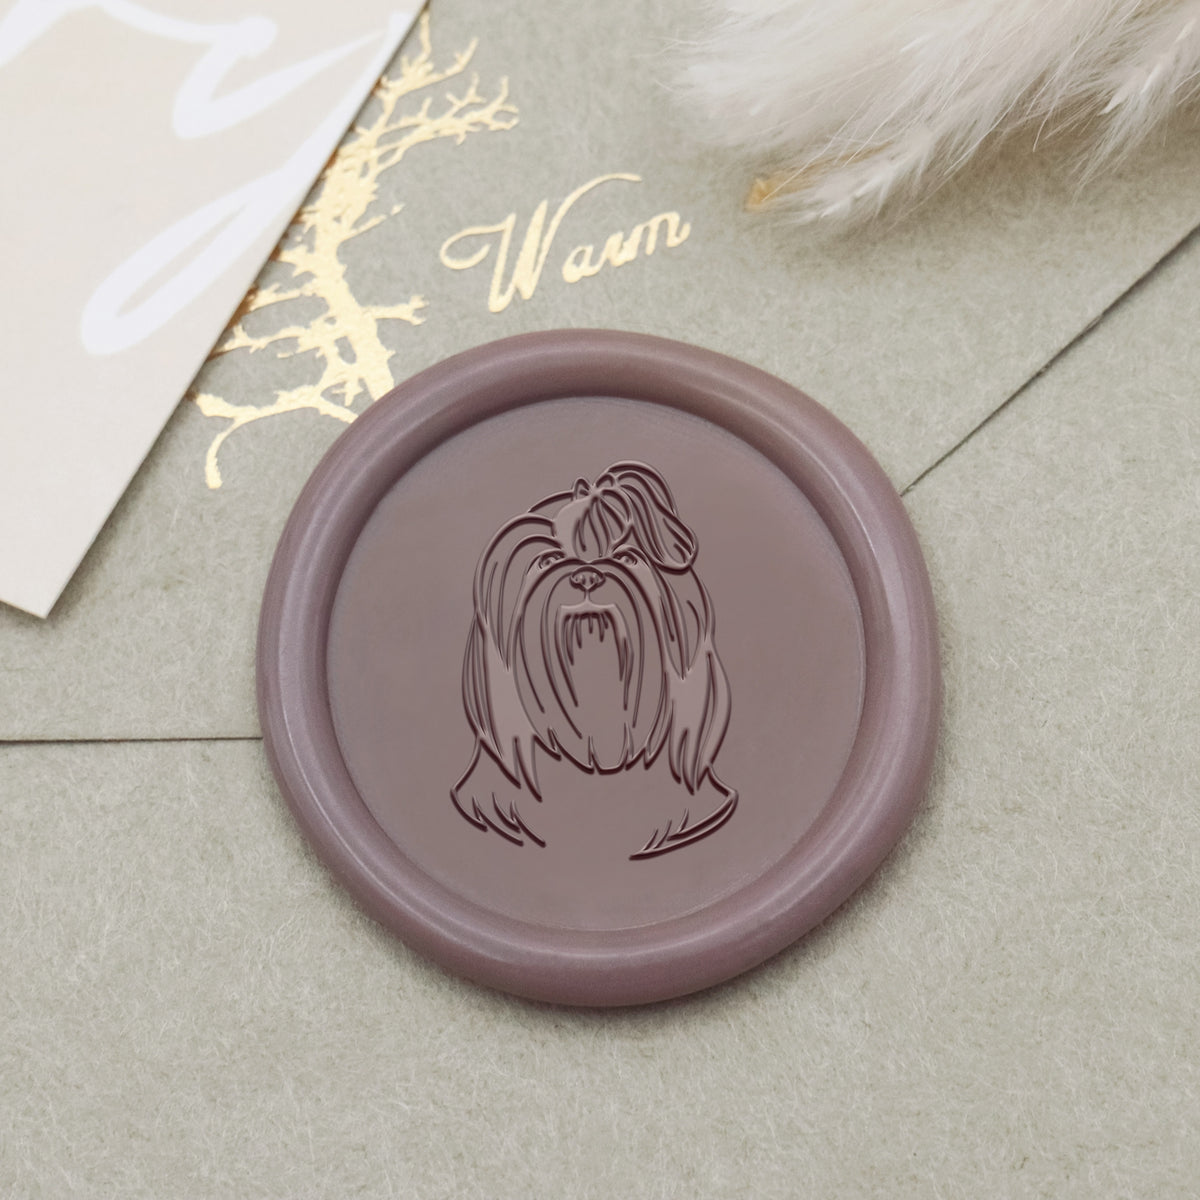 Shih Tzu Dog Wax Seal Stamp - Stamprints1